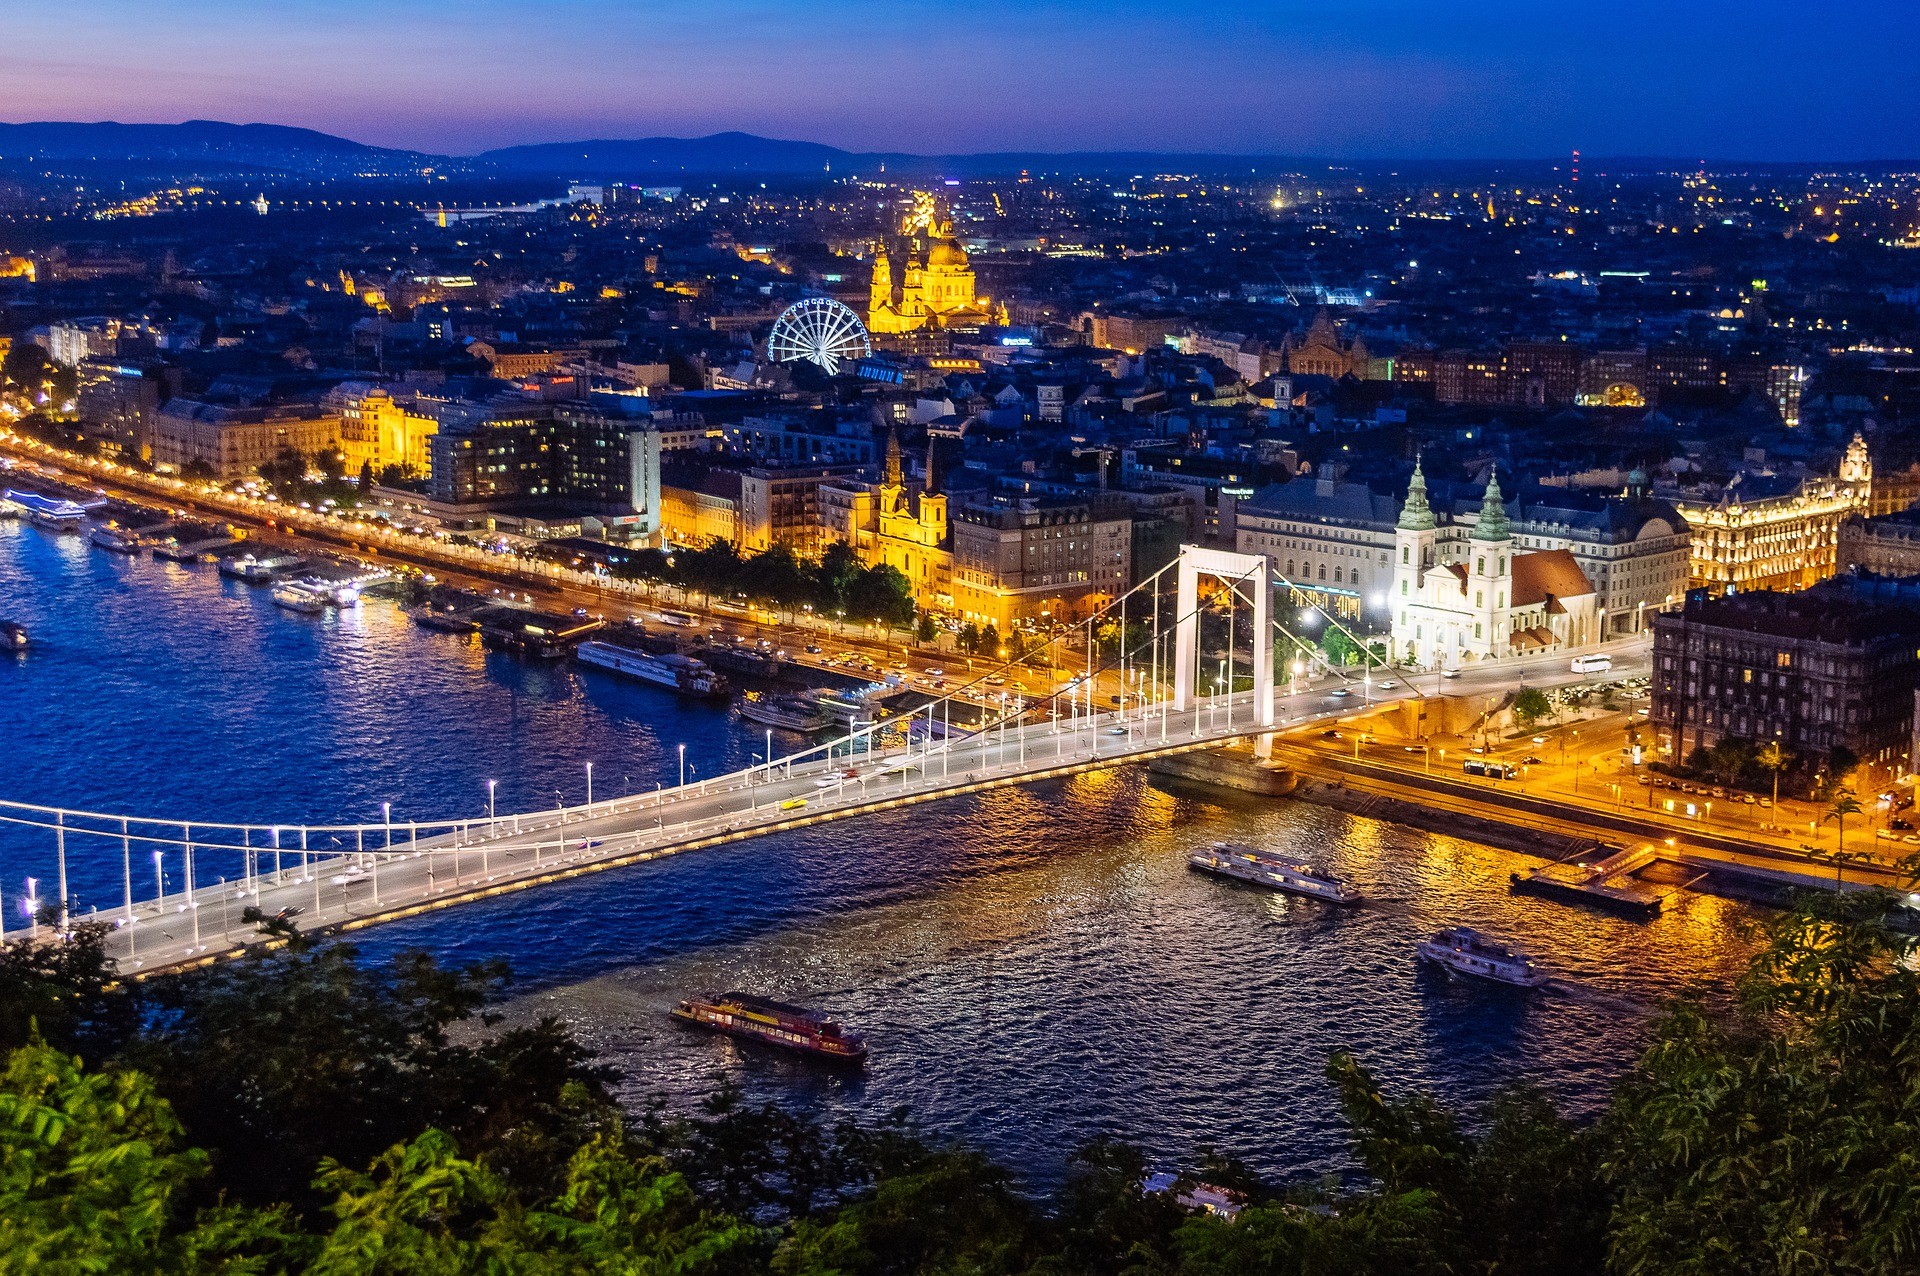 Будапешт. Река Дунай Будапешт. Венгрия столица Будапешт. Река Дунай в Венгрии. Будапешт столица река.